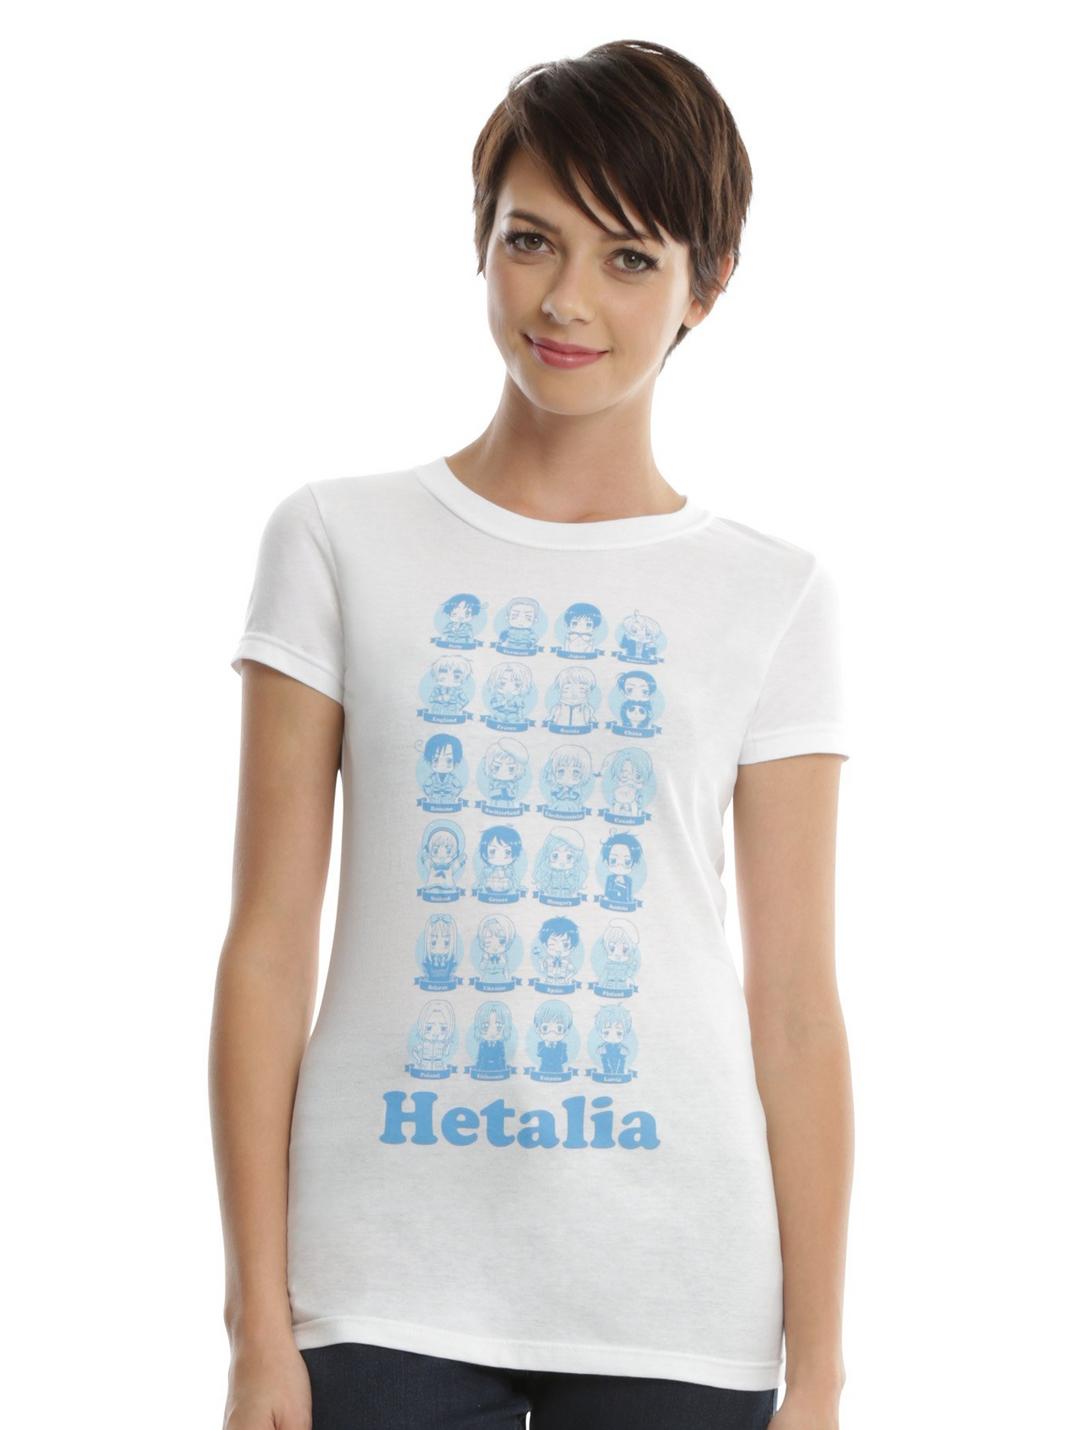 Hetalia: Axis Powers Chibi Countries Girls T-Shirt, WHITE, hi-res